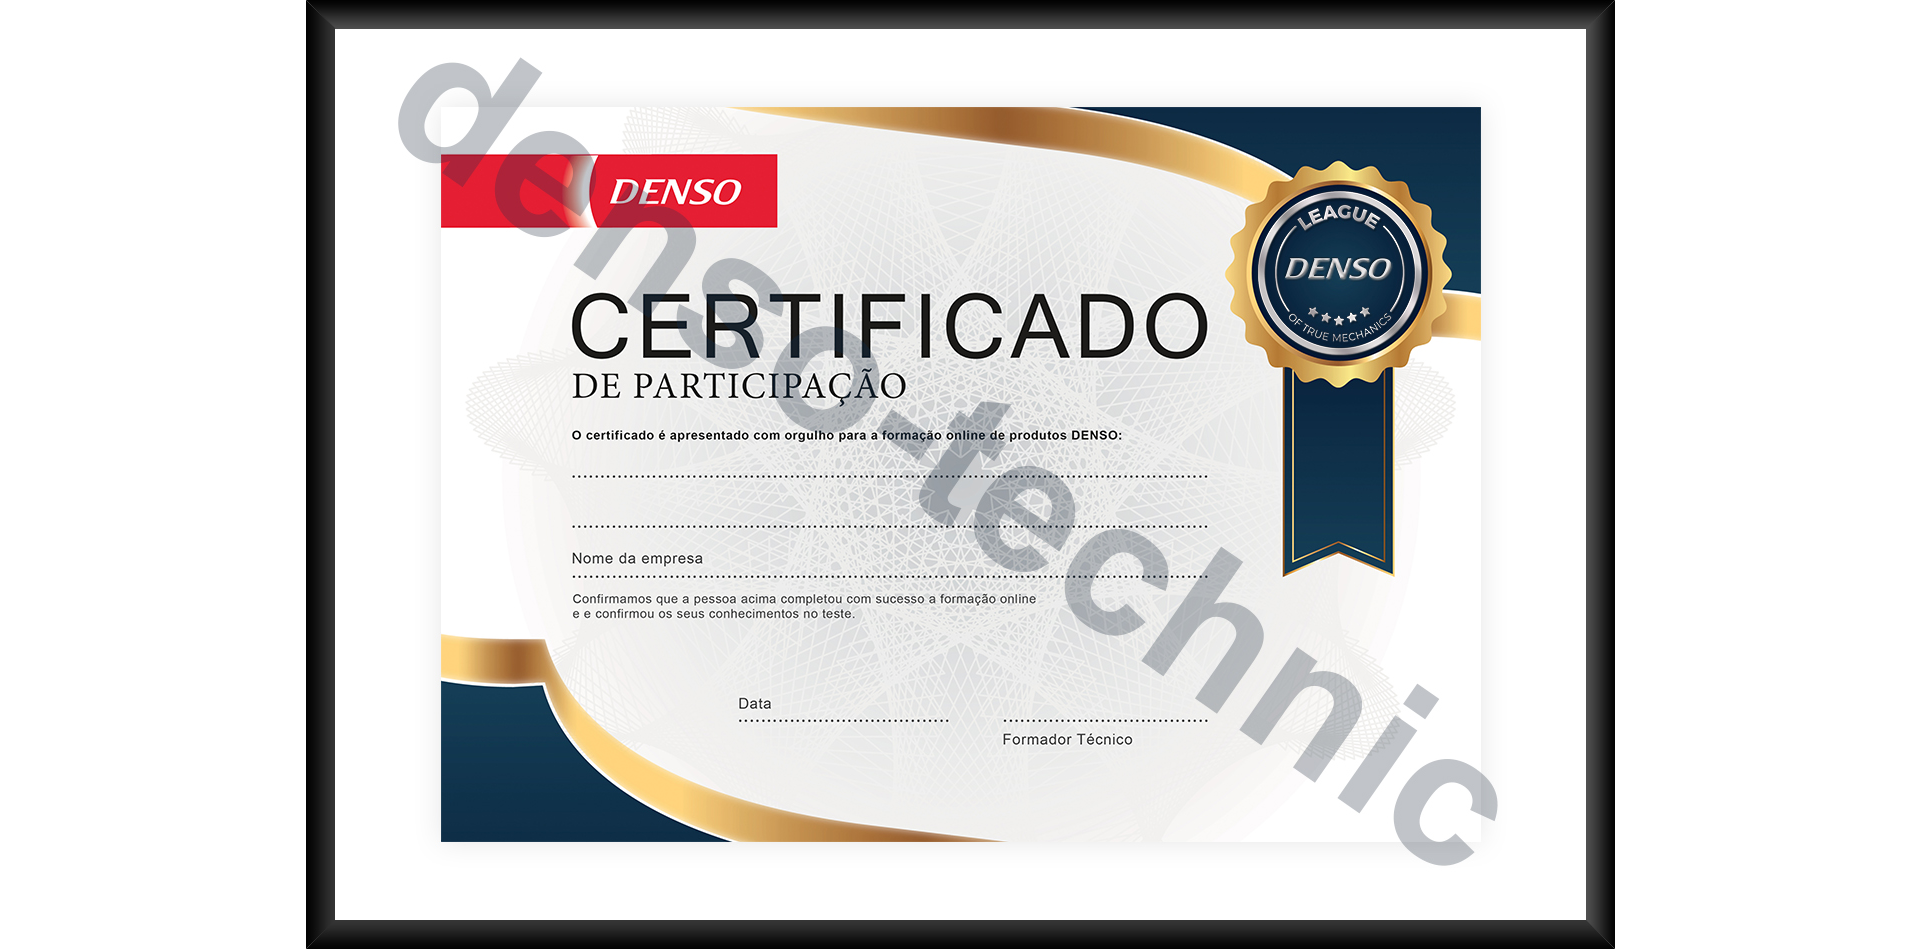 DENSO - Certificado